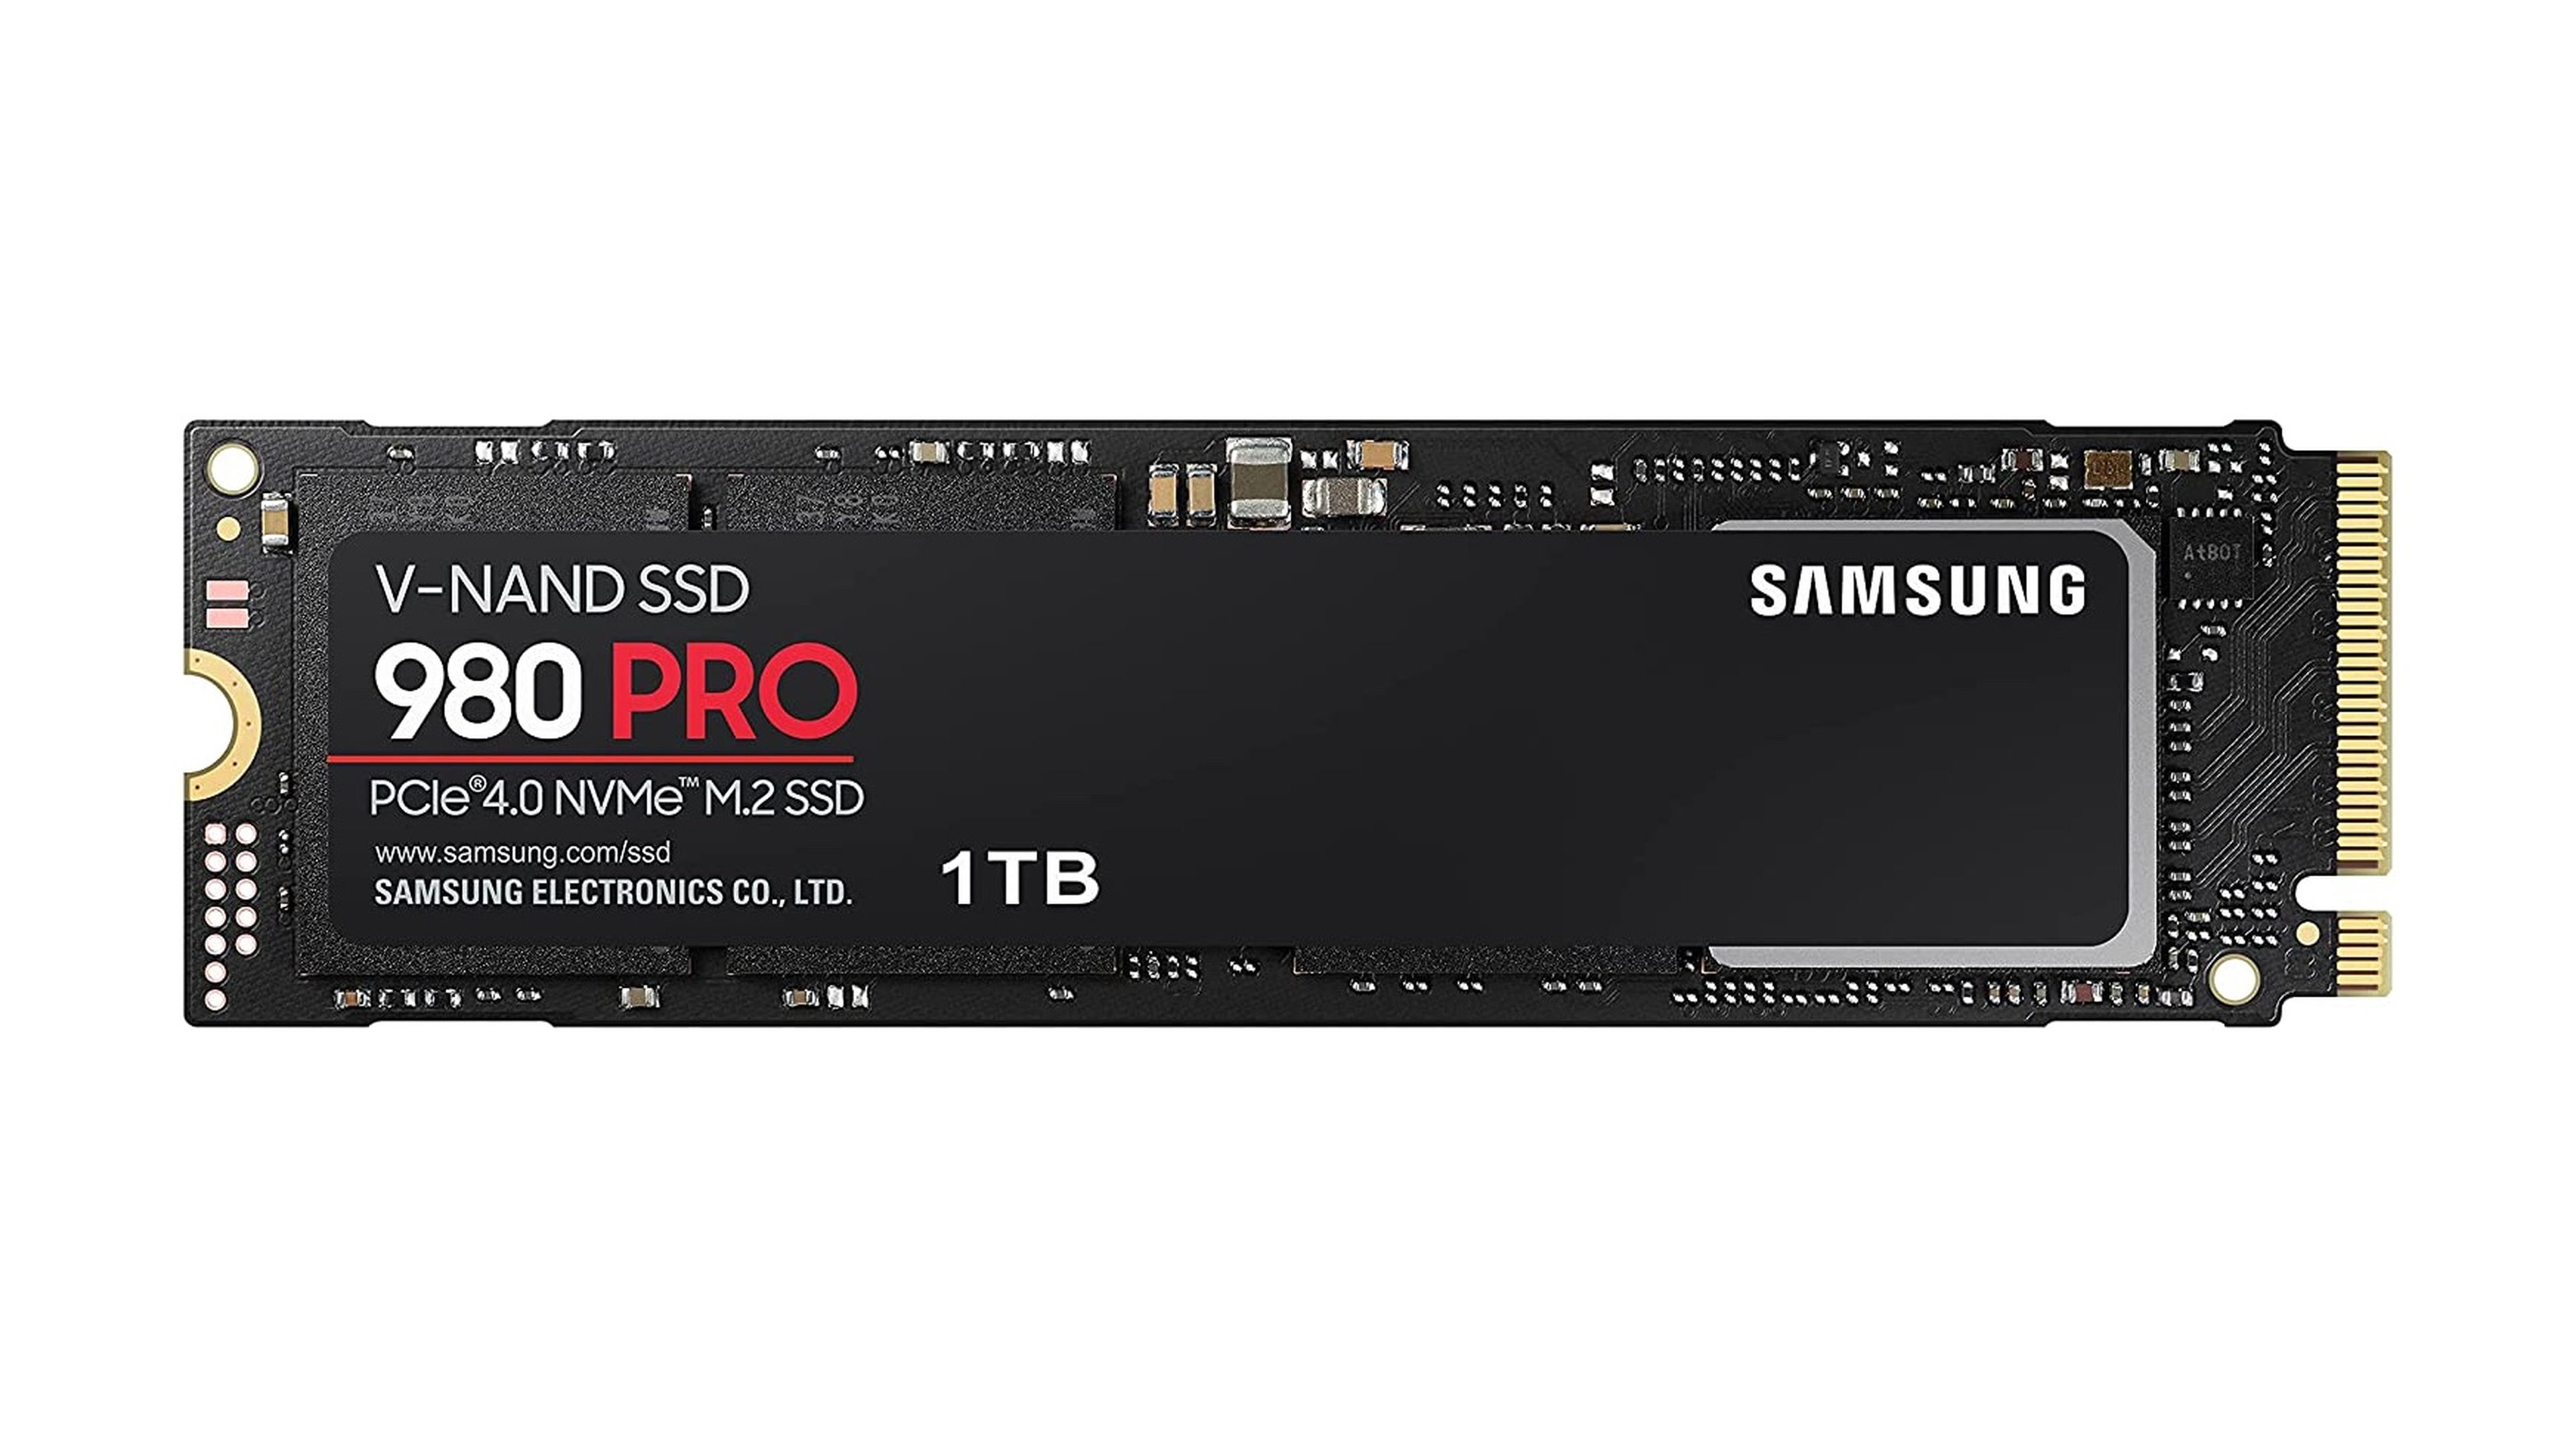 Samsung 980 Pro